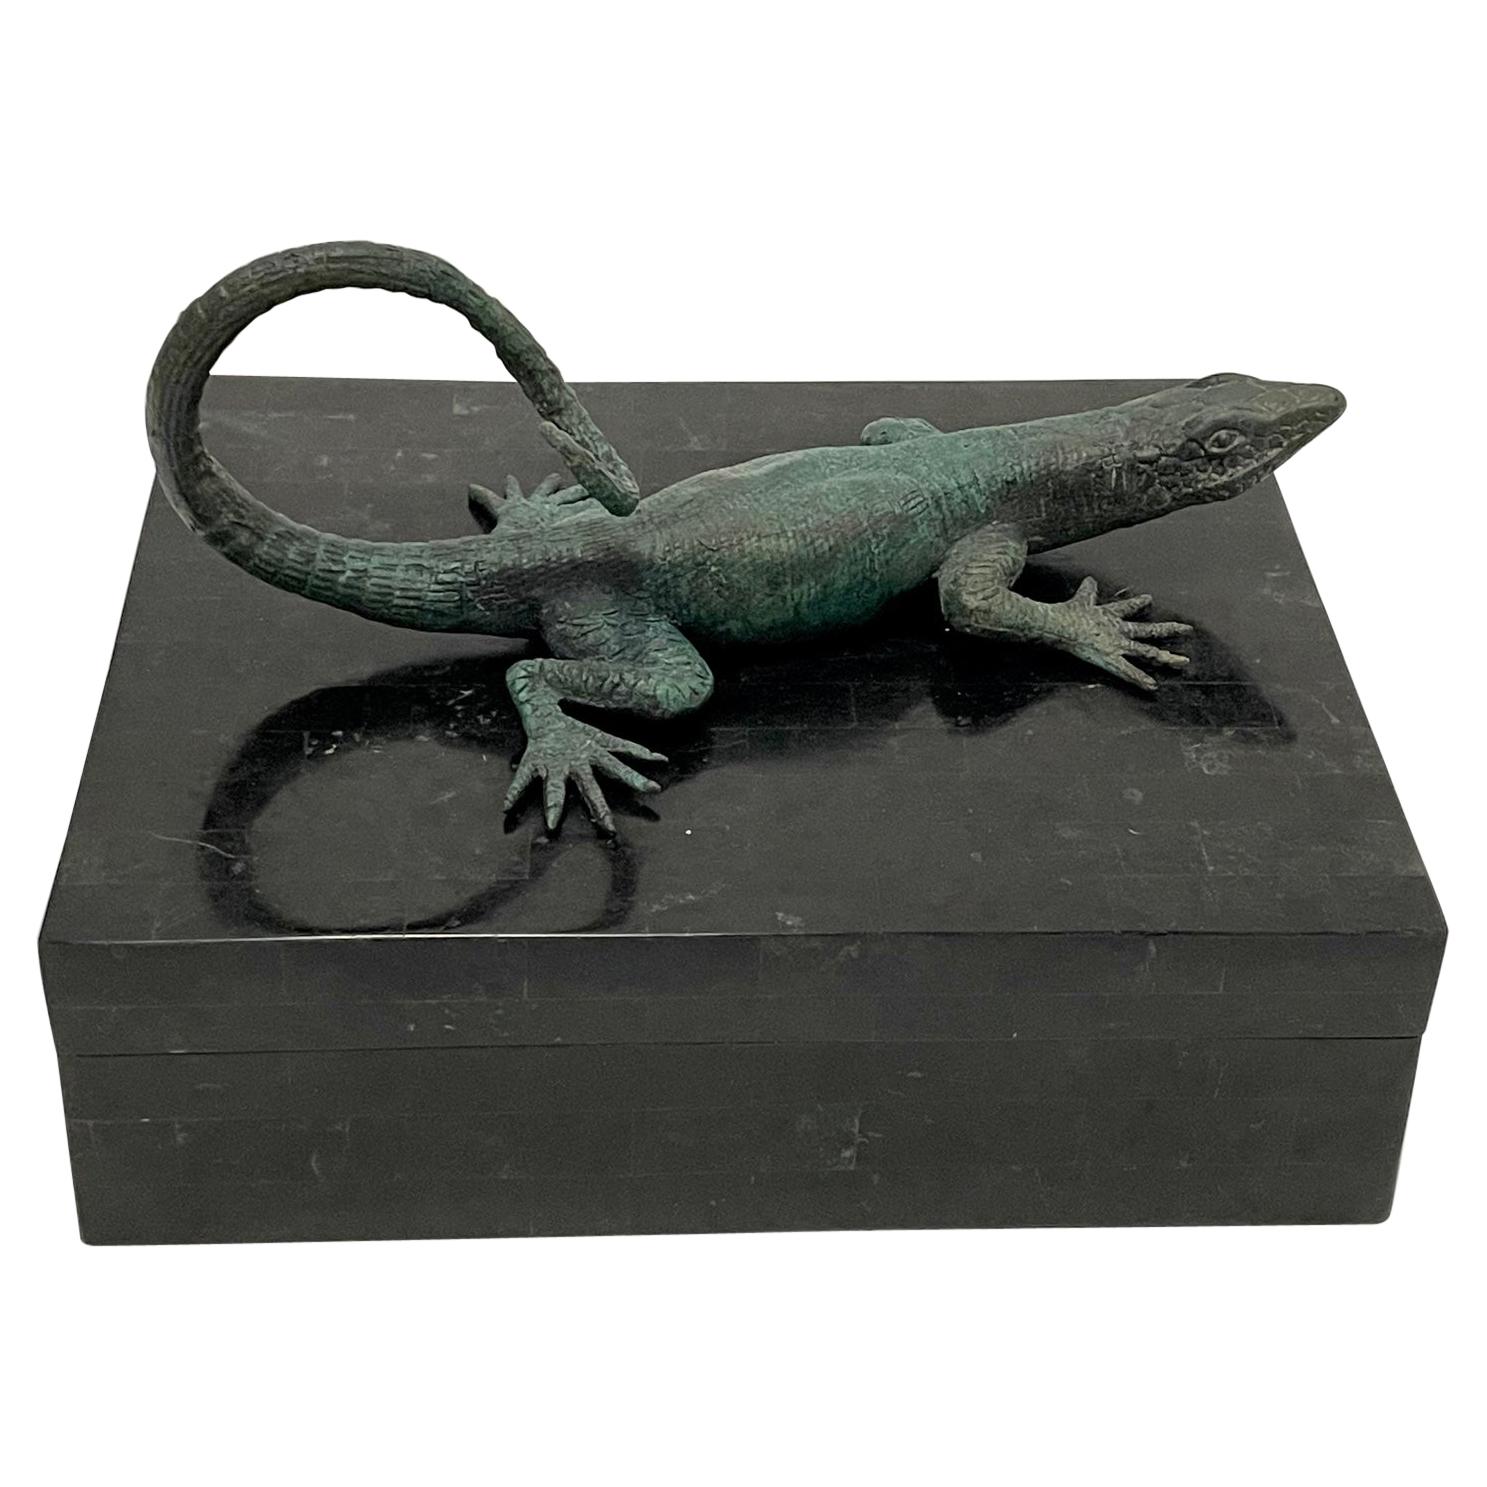 Stunning Maitland Smith Tessellated Stone Box with Bronze Lizard Handle